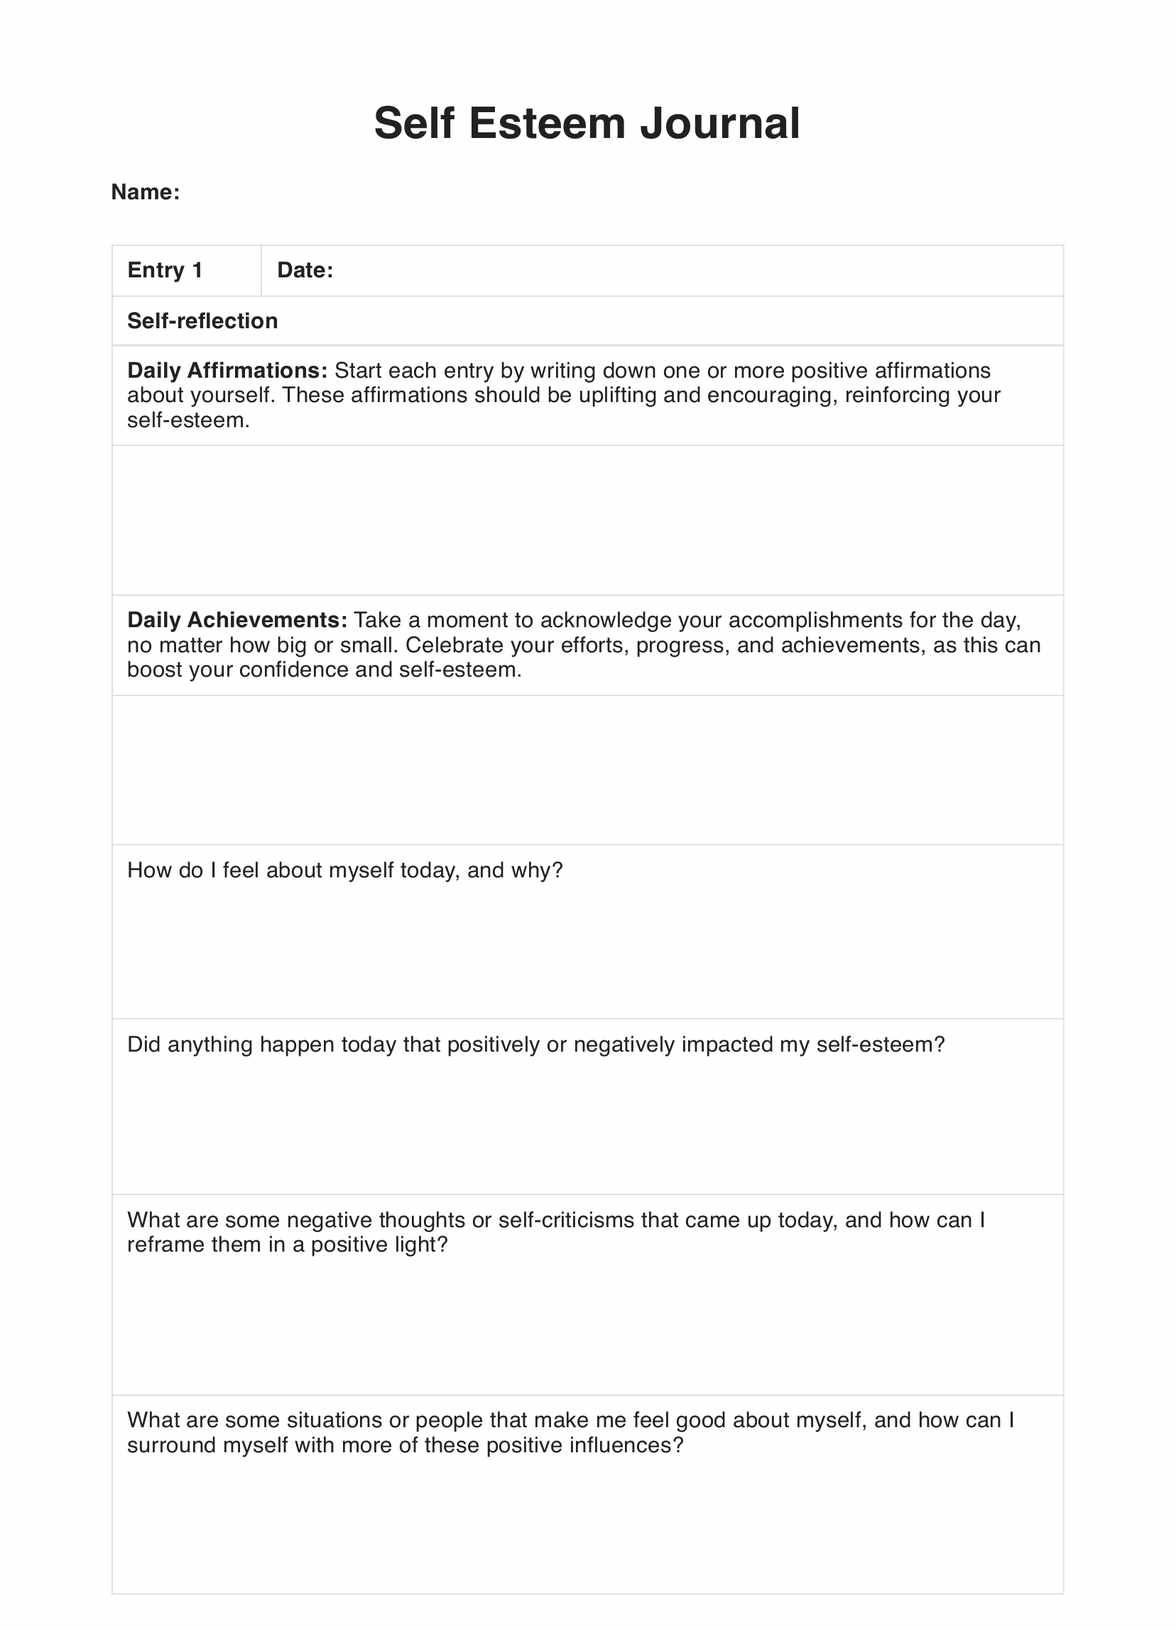 Self-Esteem Journal PDF Example